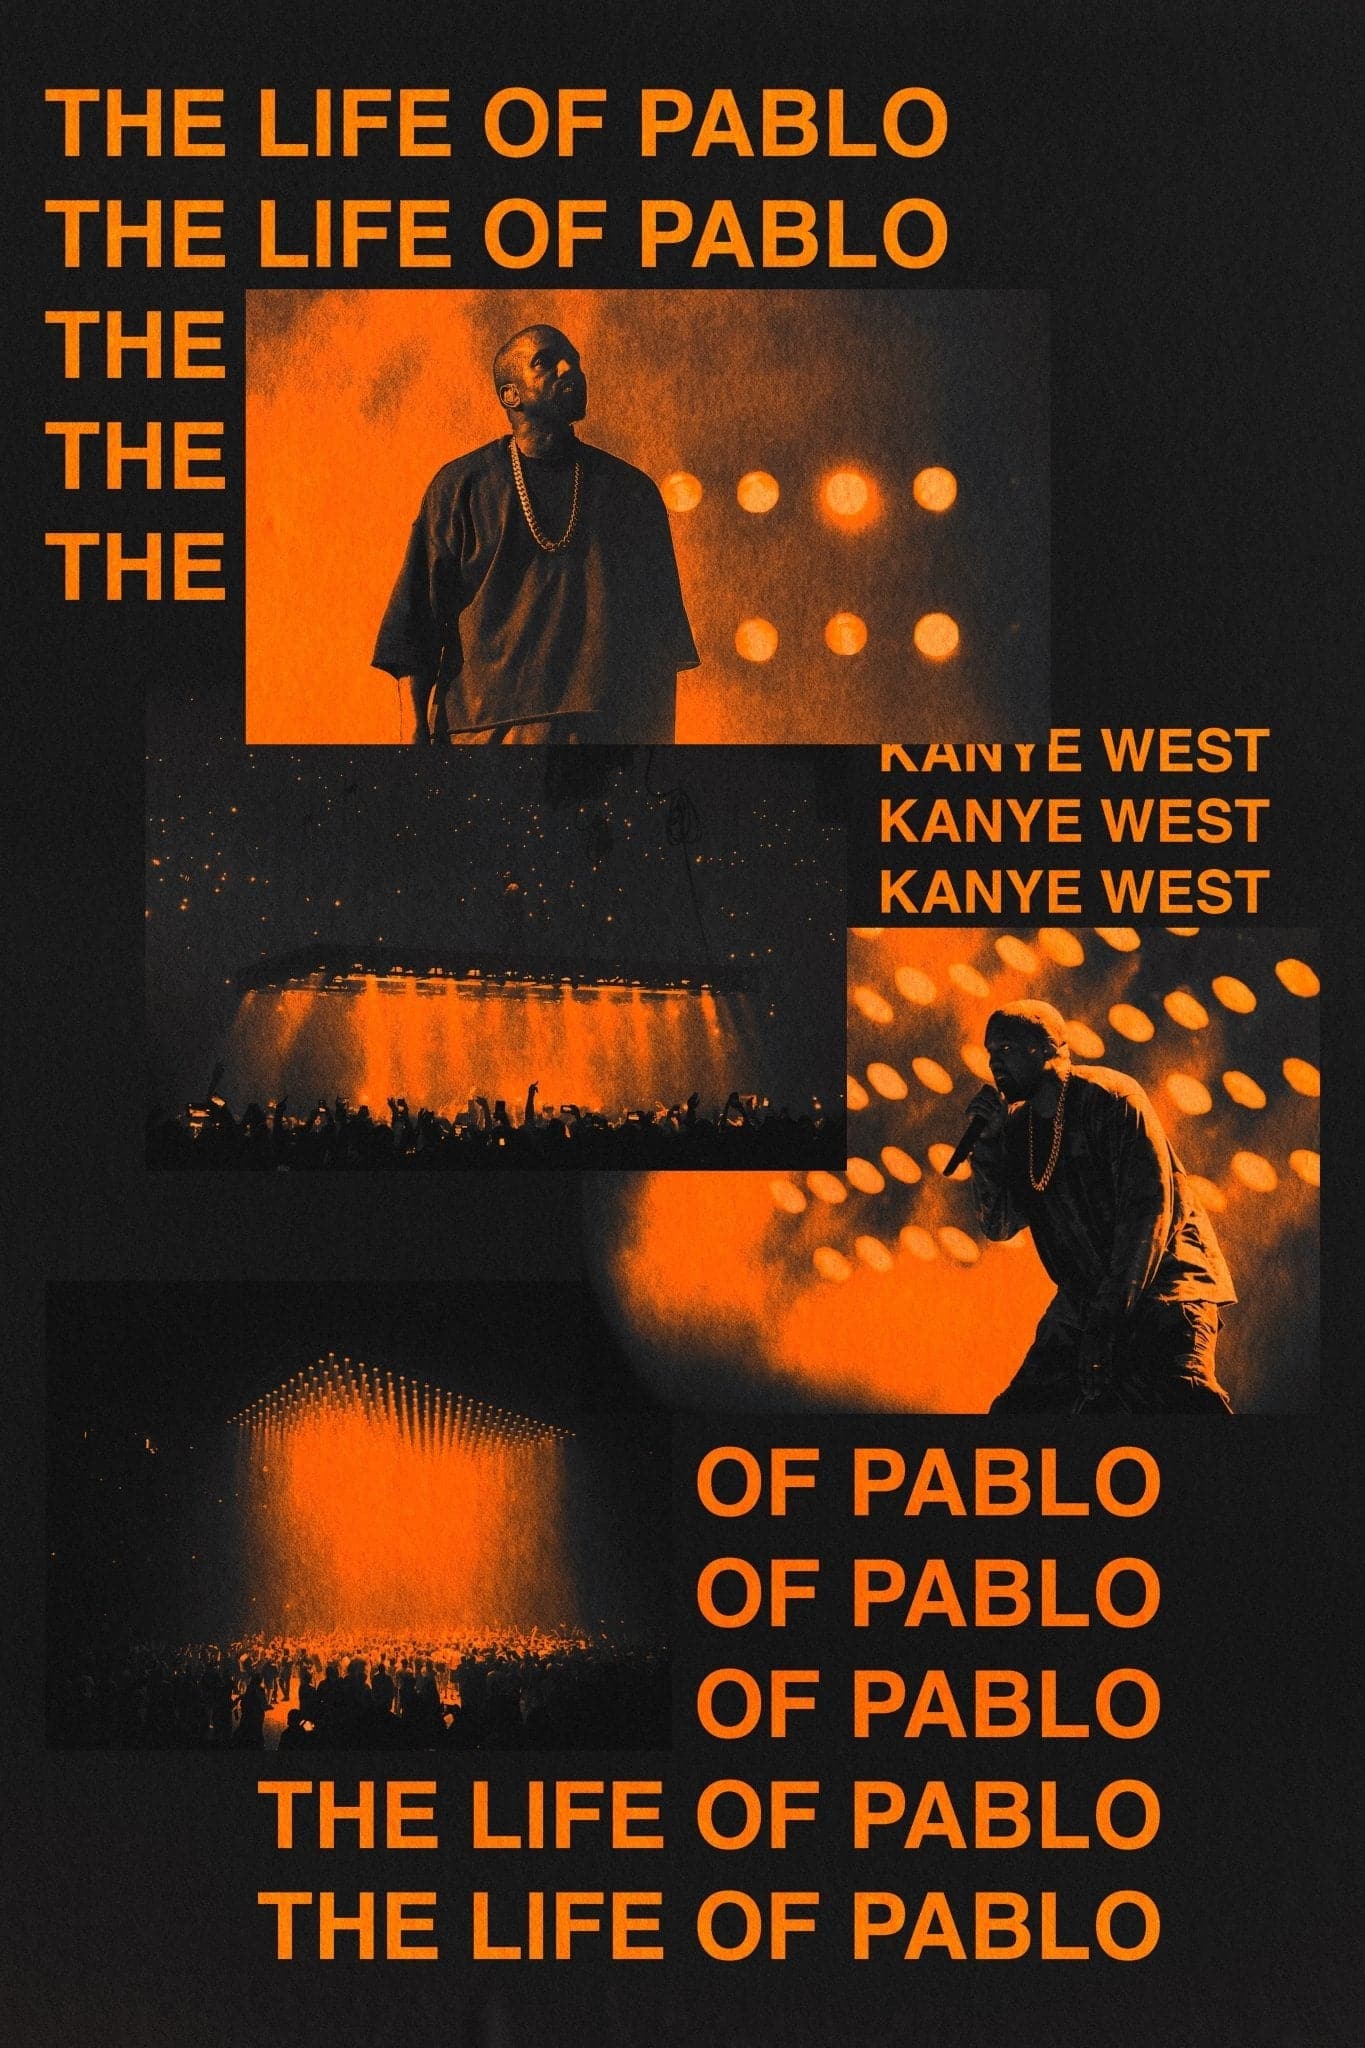 Kanye West  Kanye west, Music poster design, Graphic poster